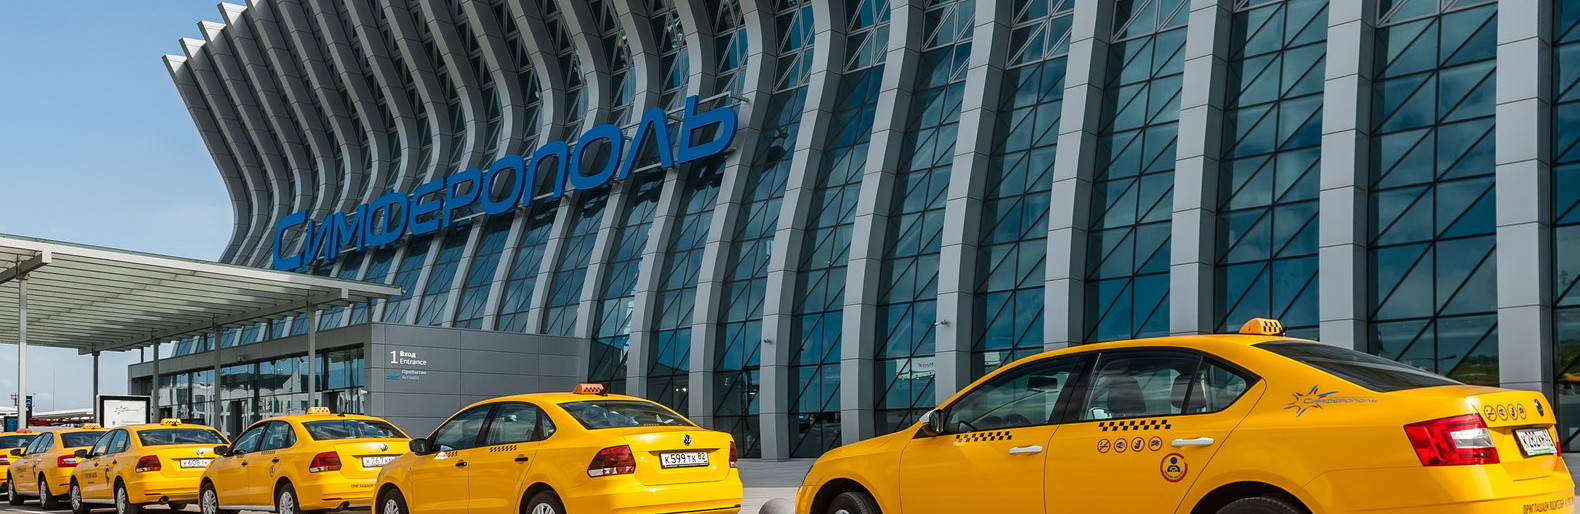 Такси в аэропорту Симферополя стало доступнее. Фото: https://www.3652.ru/